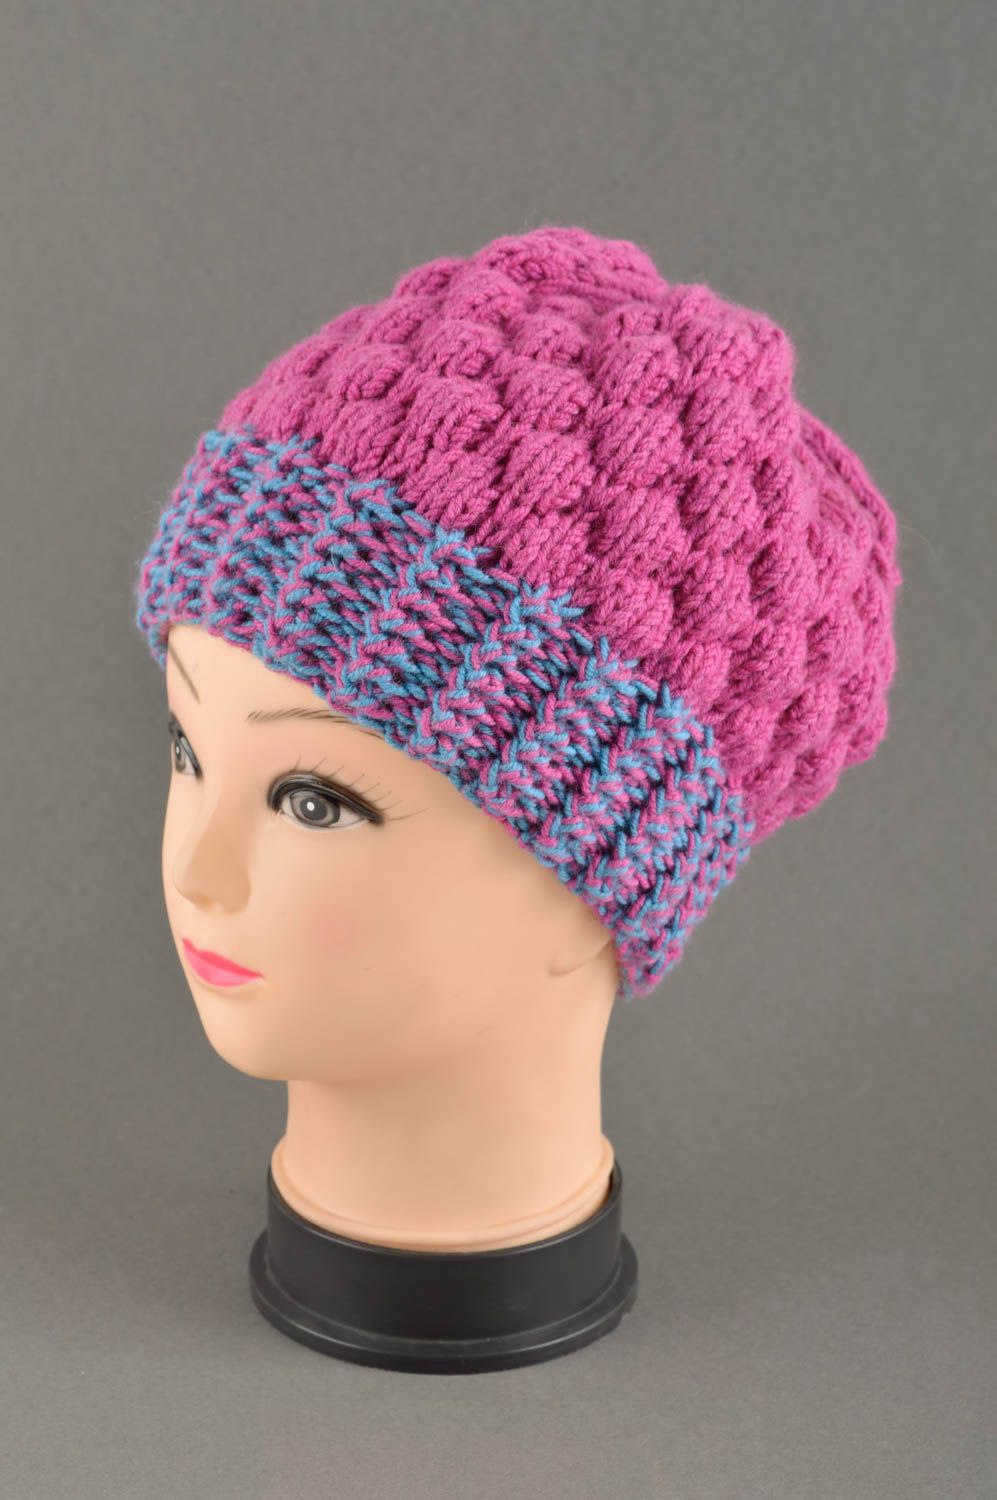 Handmade hat winter hat for girls unusual gift designer hat gift ideas  photo 1